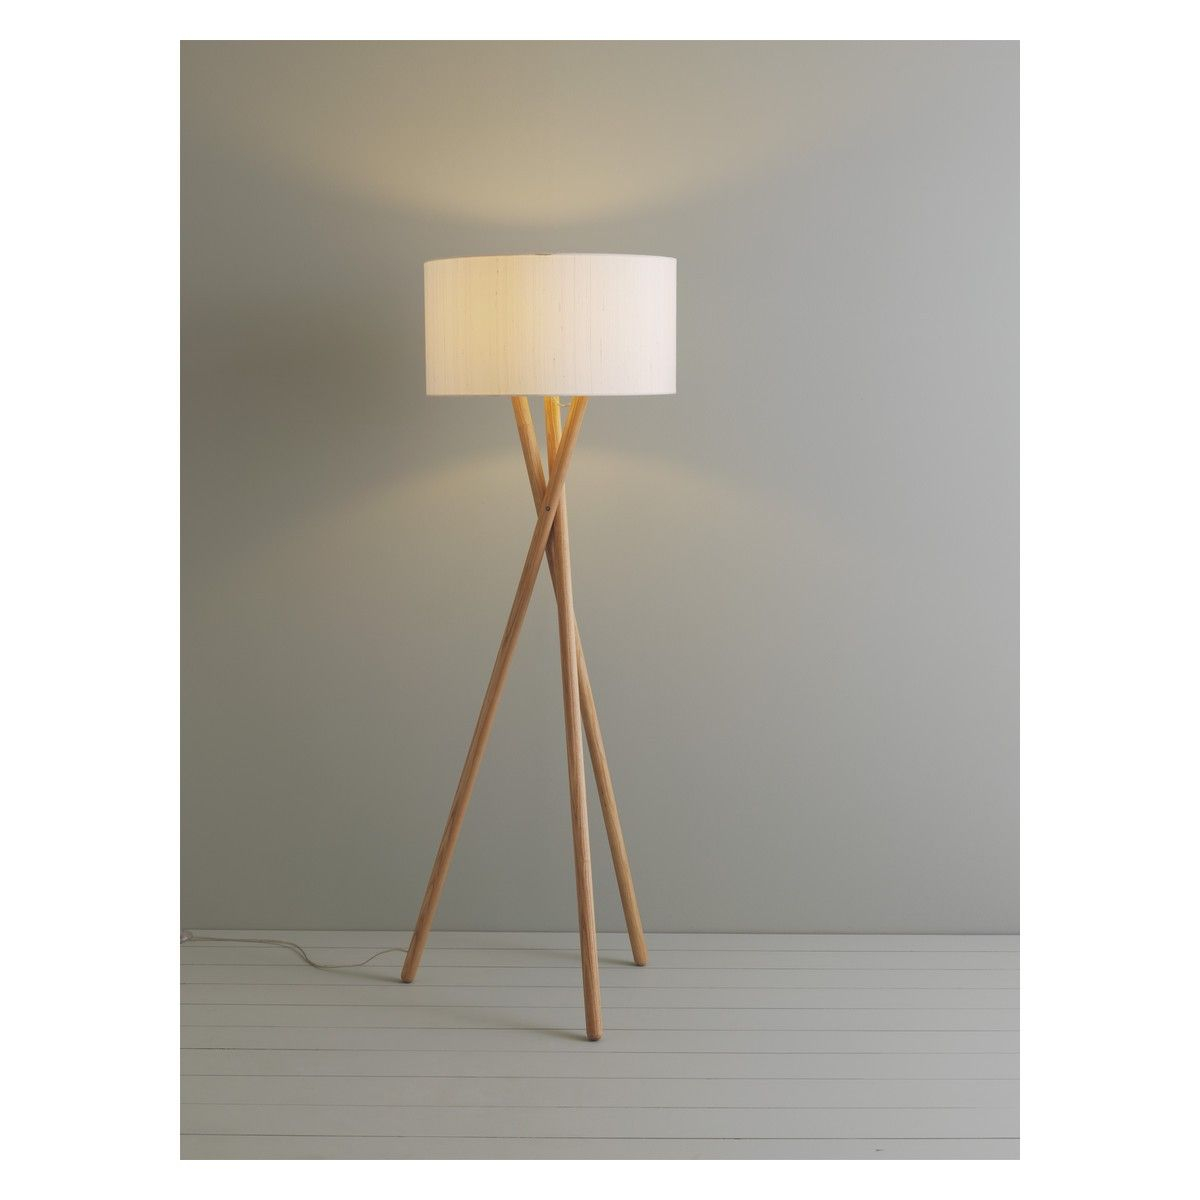 Lansbury Base Ash Wooden Tripod Floor Lamp Wooden Tripod in size 1200 X 1200